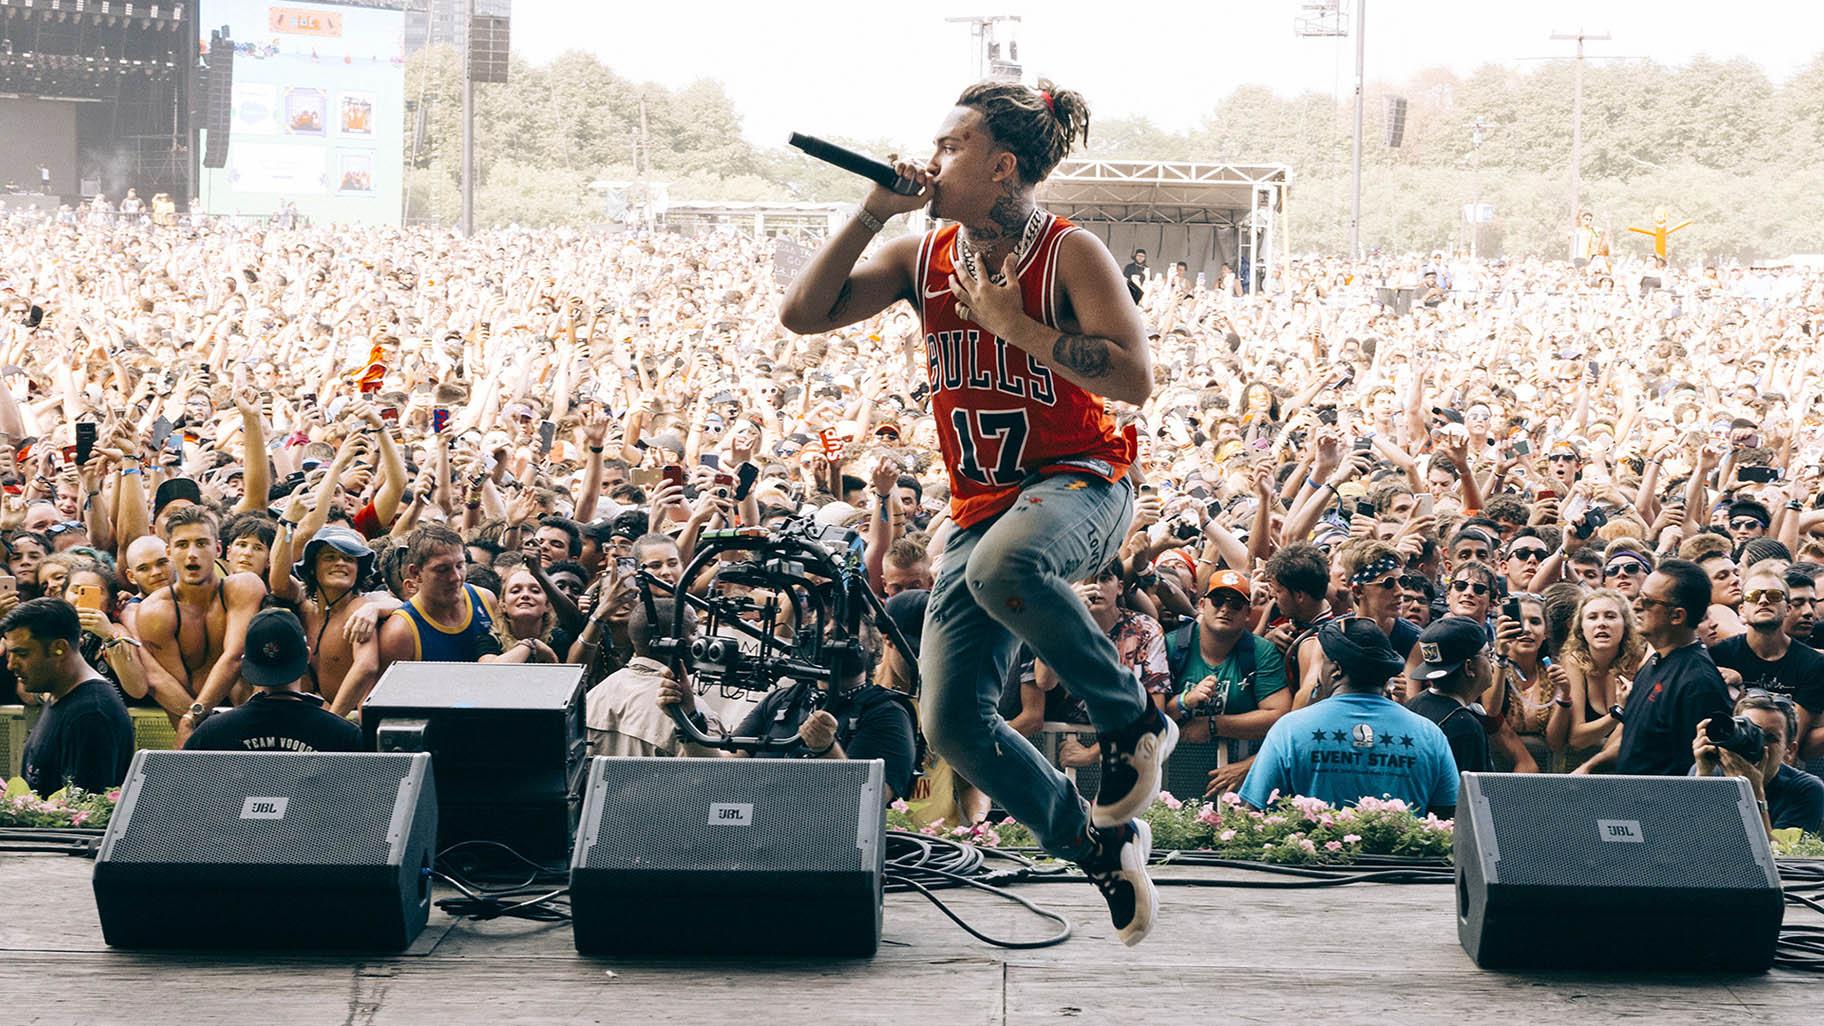 Lil Pump on stage at Lollapalooza on Aug. 4, 2018. (Scott Witt / Lollapalooza 2018)